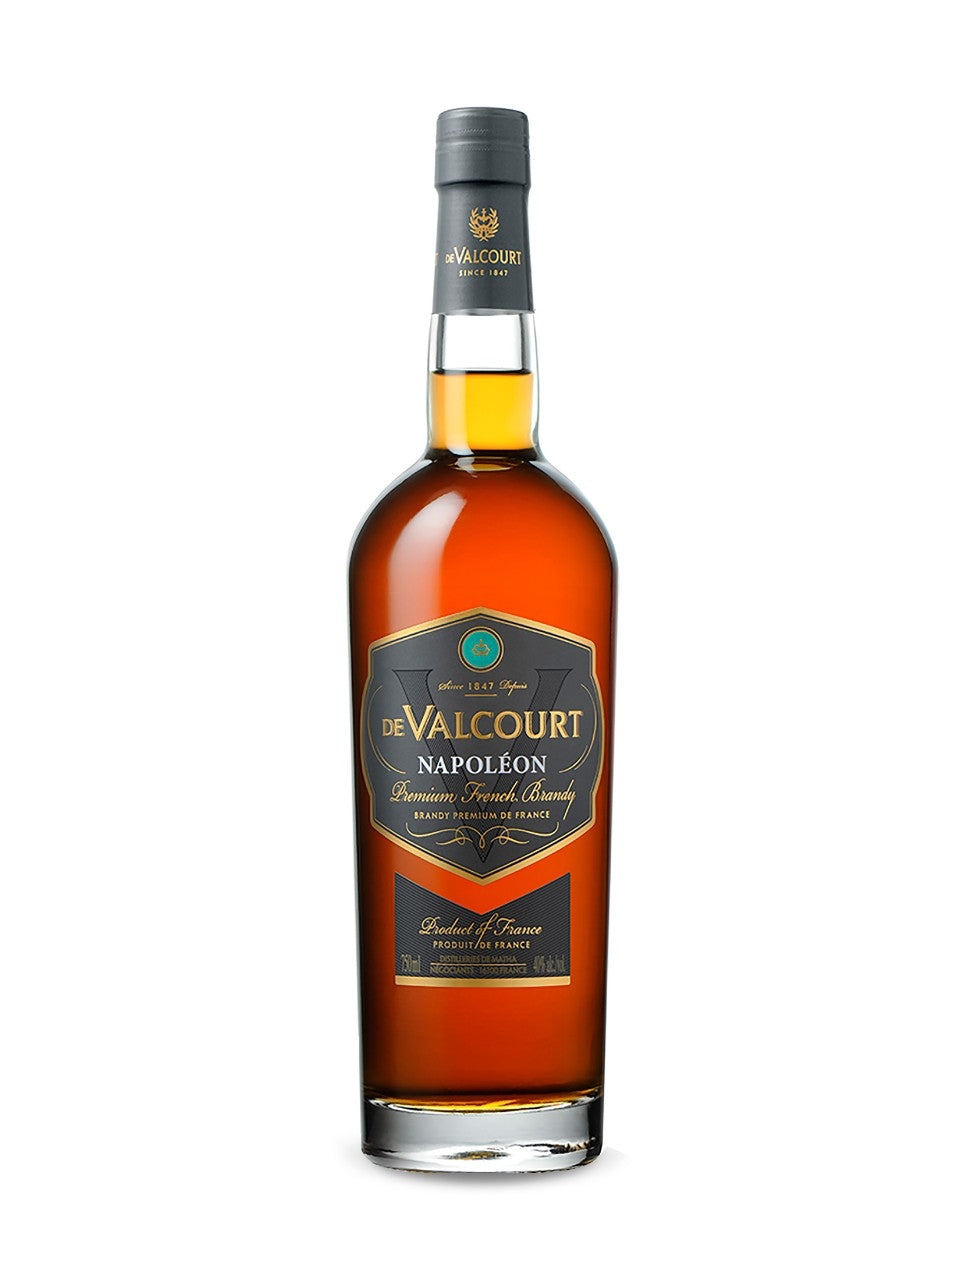 De Valcourt Napoleon Brandy VSOP 750 mL bottle